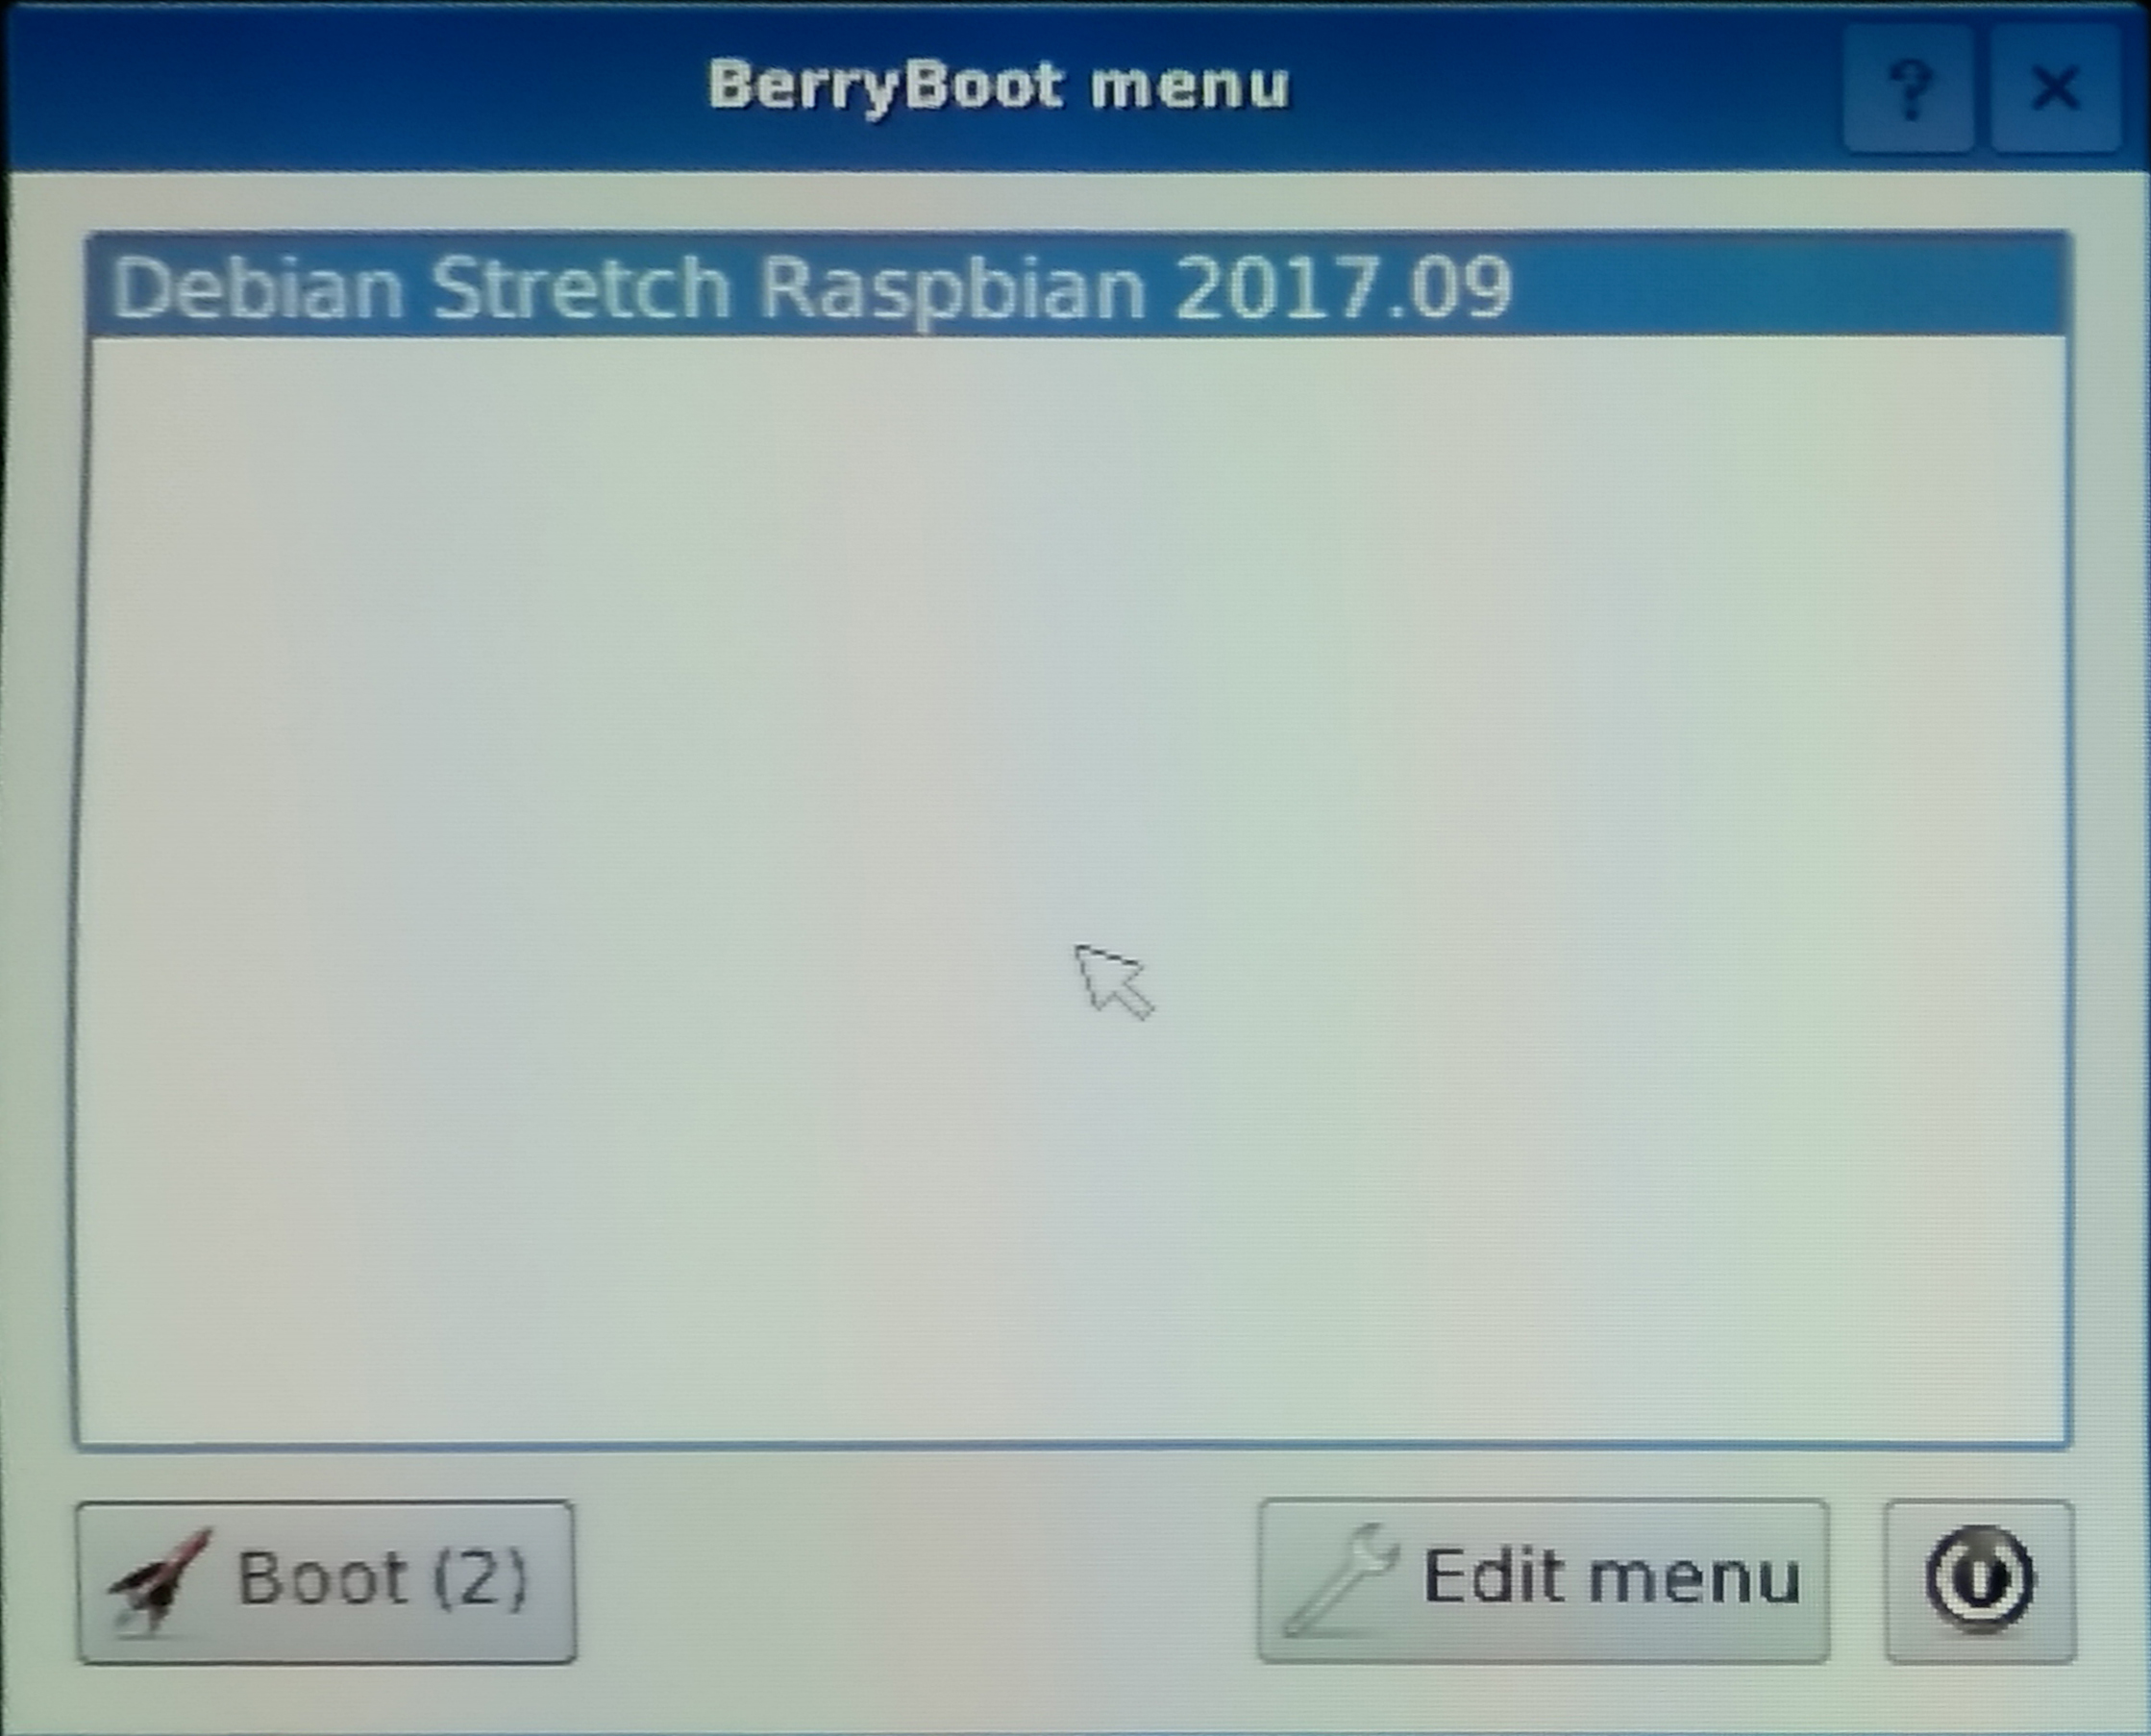 schermata iniziale di BerryBoot.